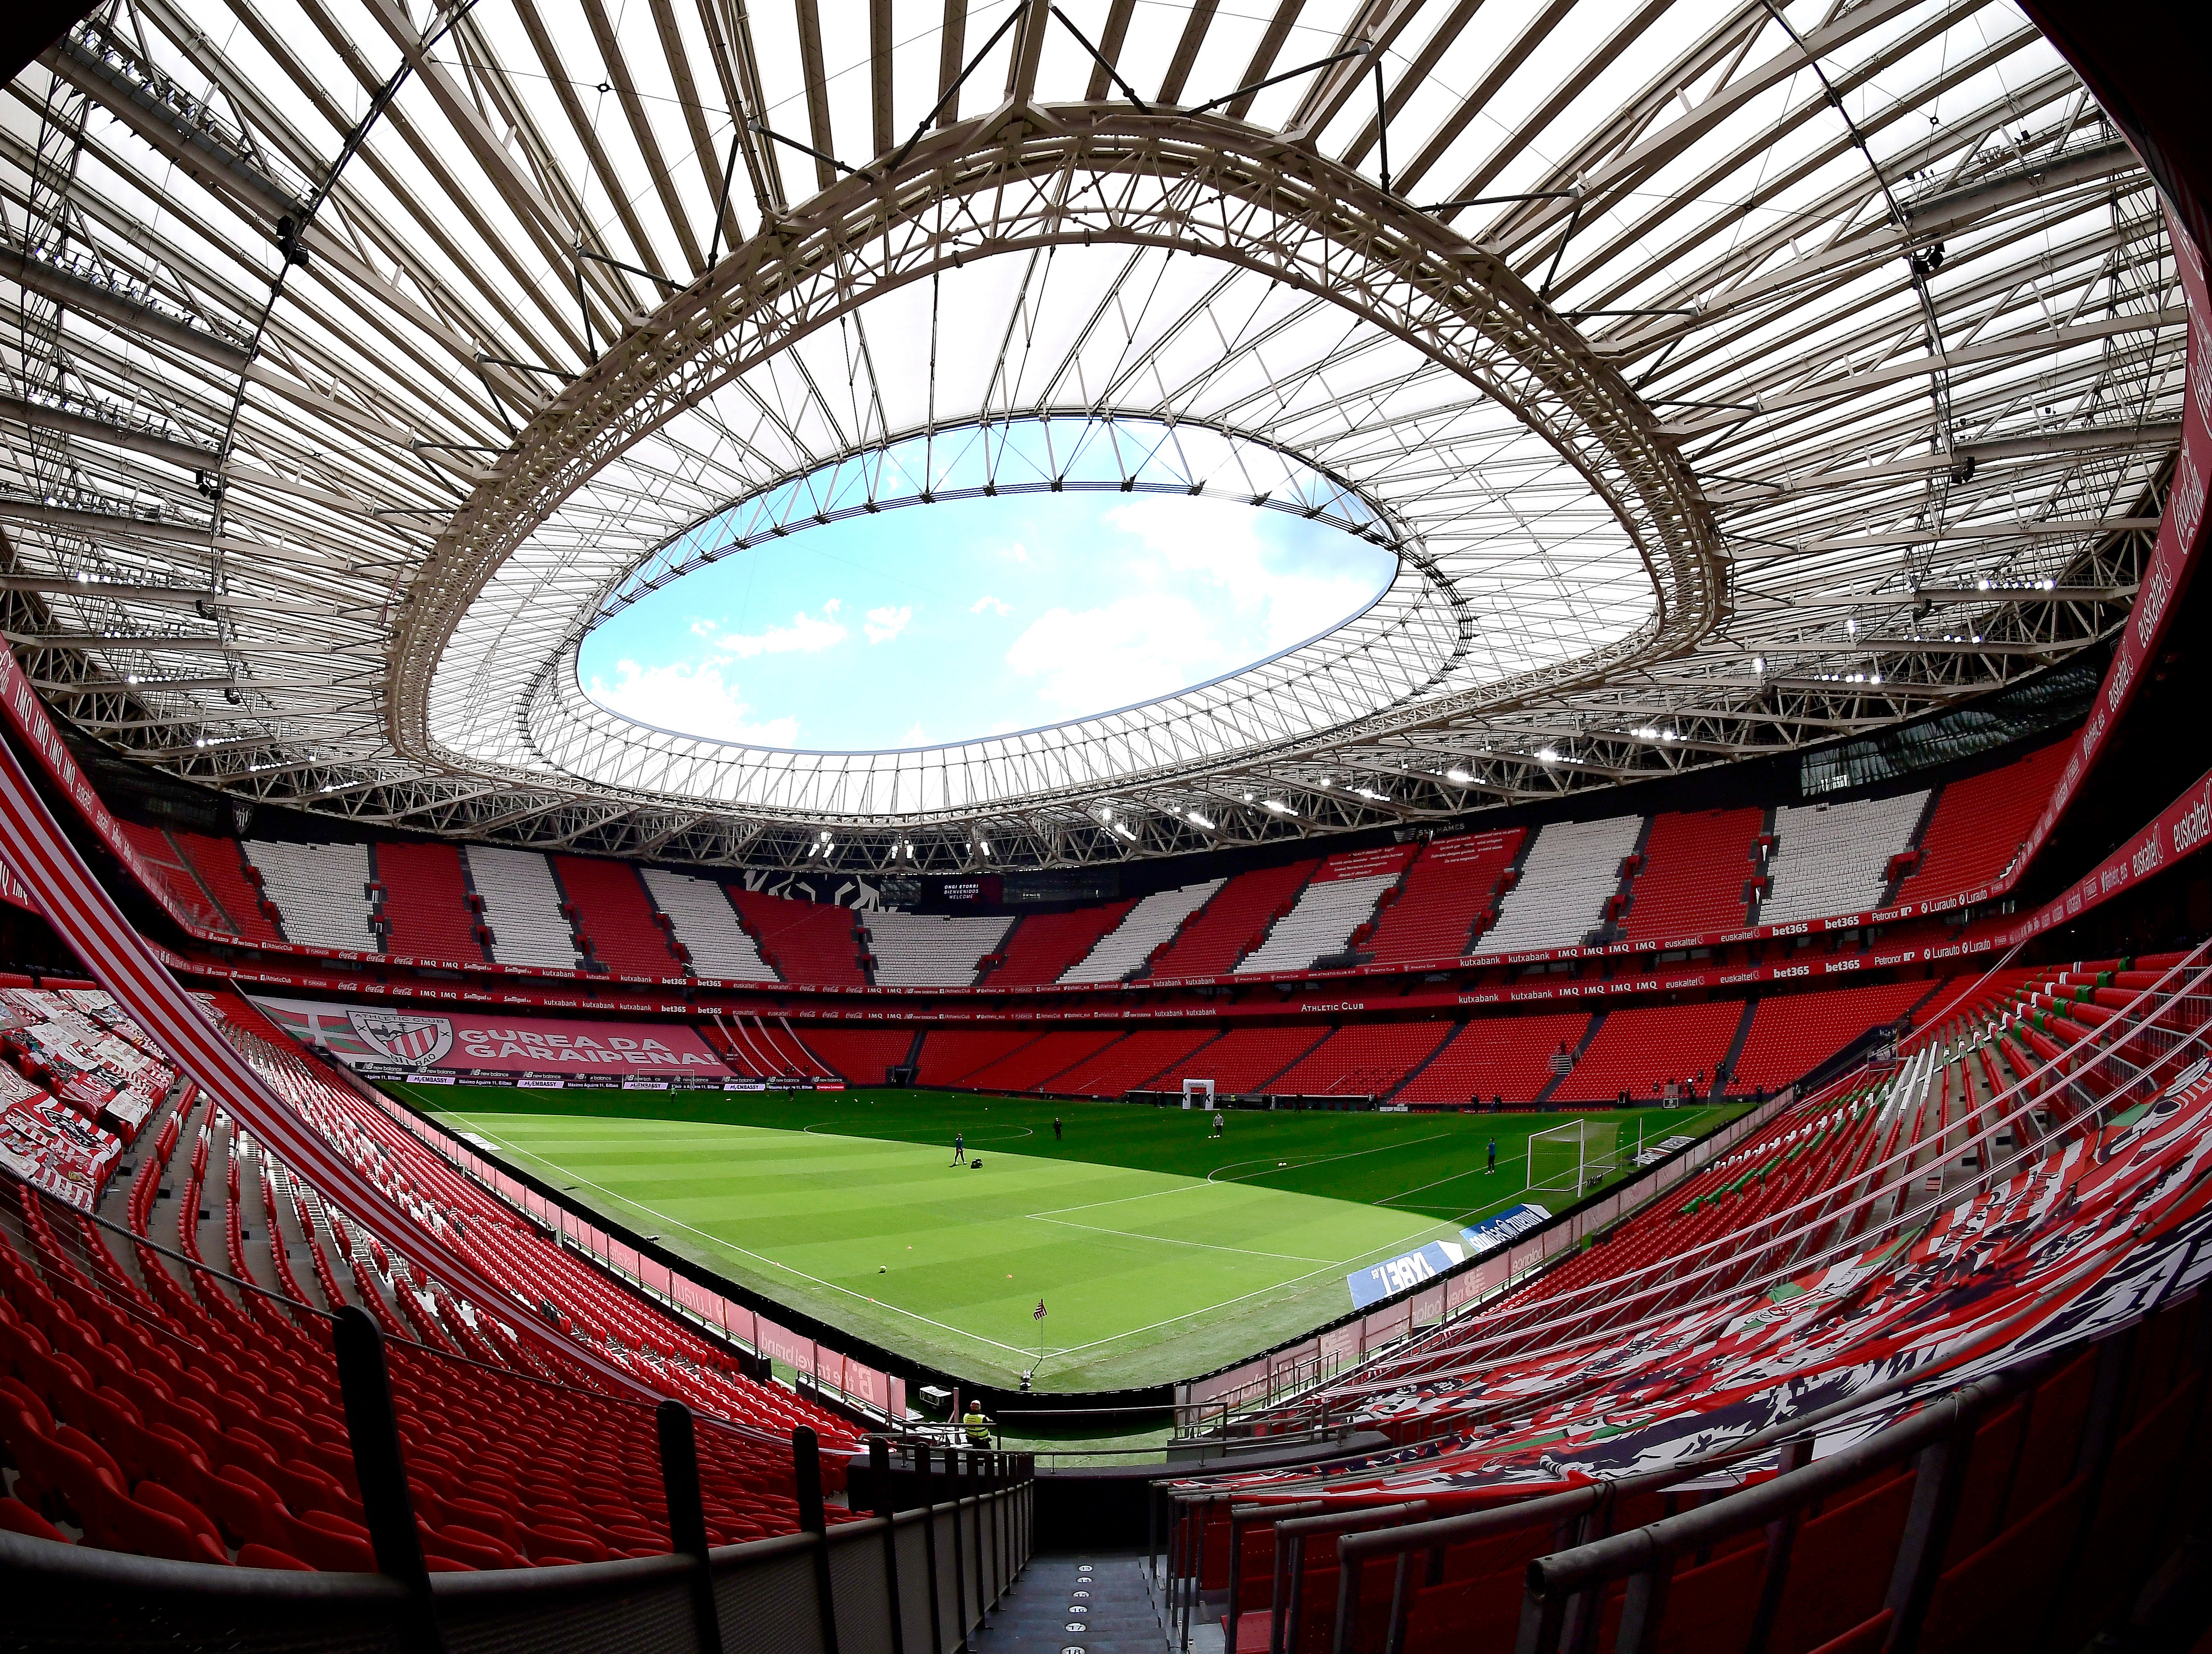 Atletic Bilbao’s San Mames stadium